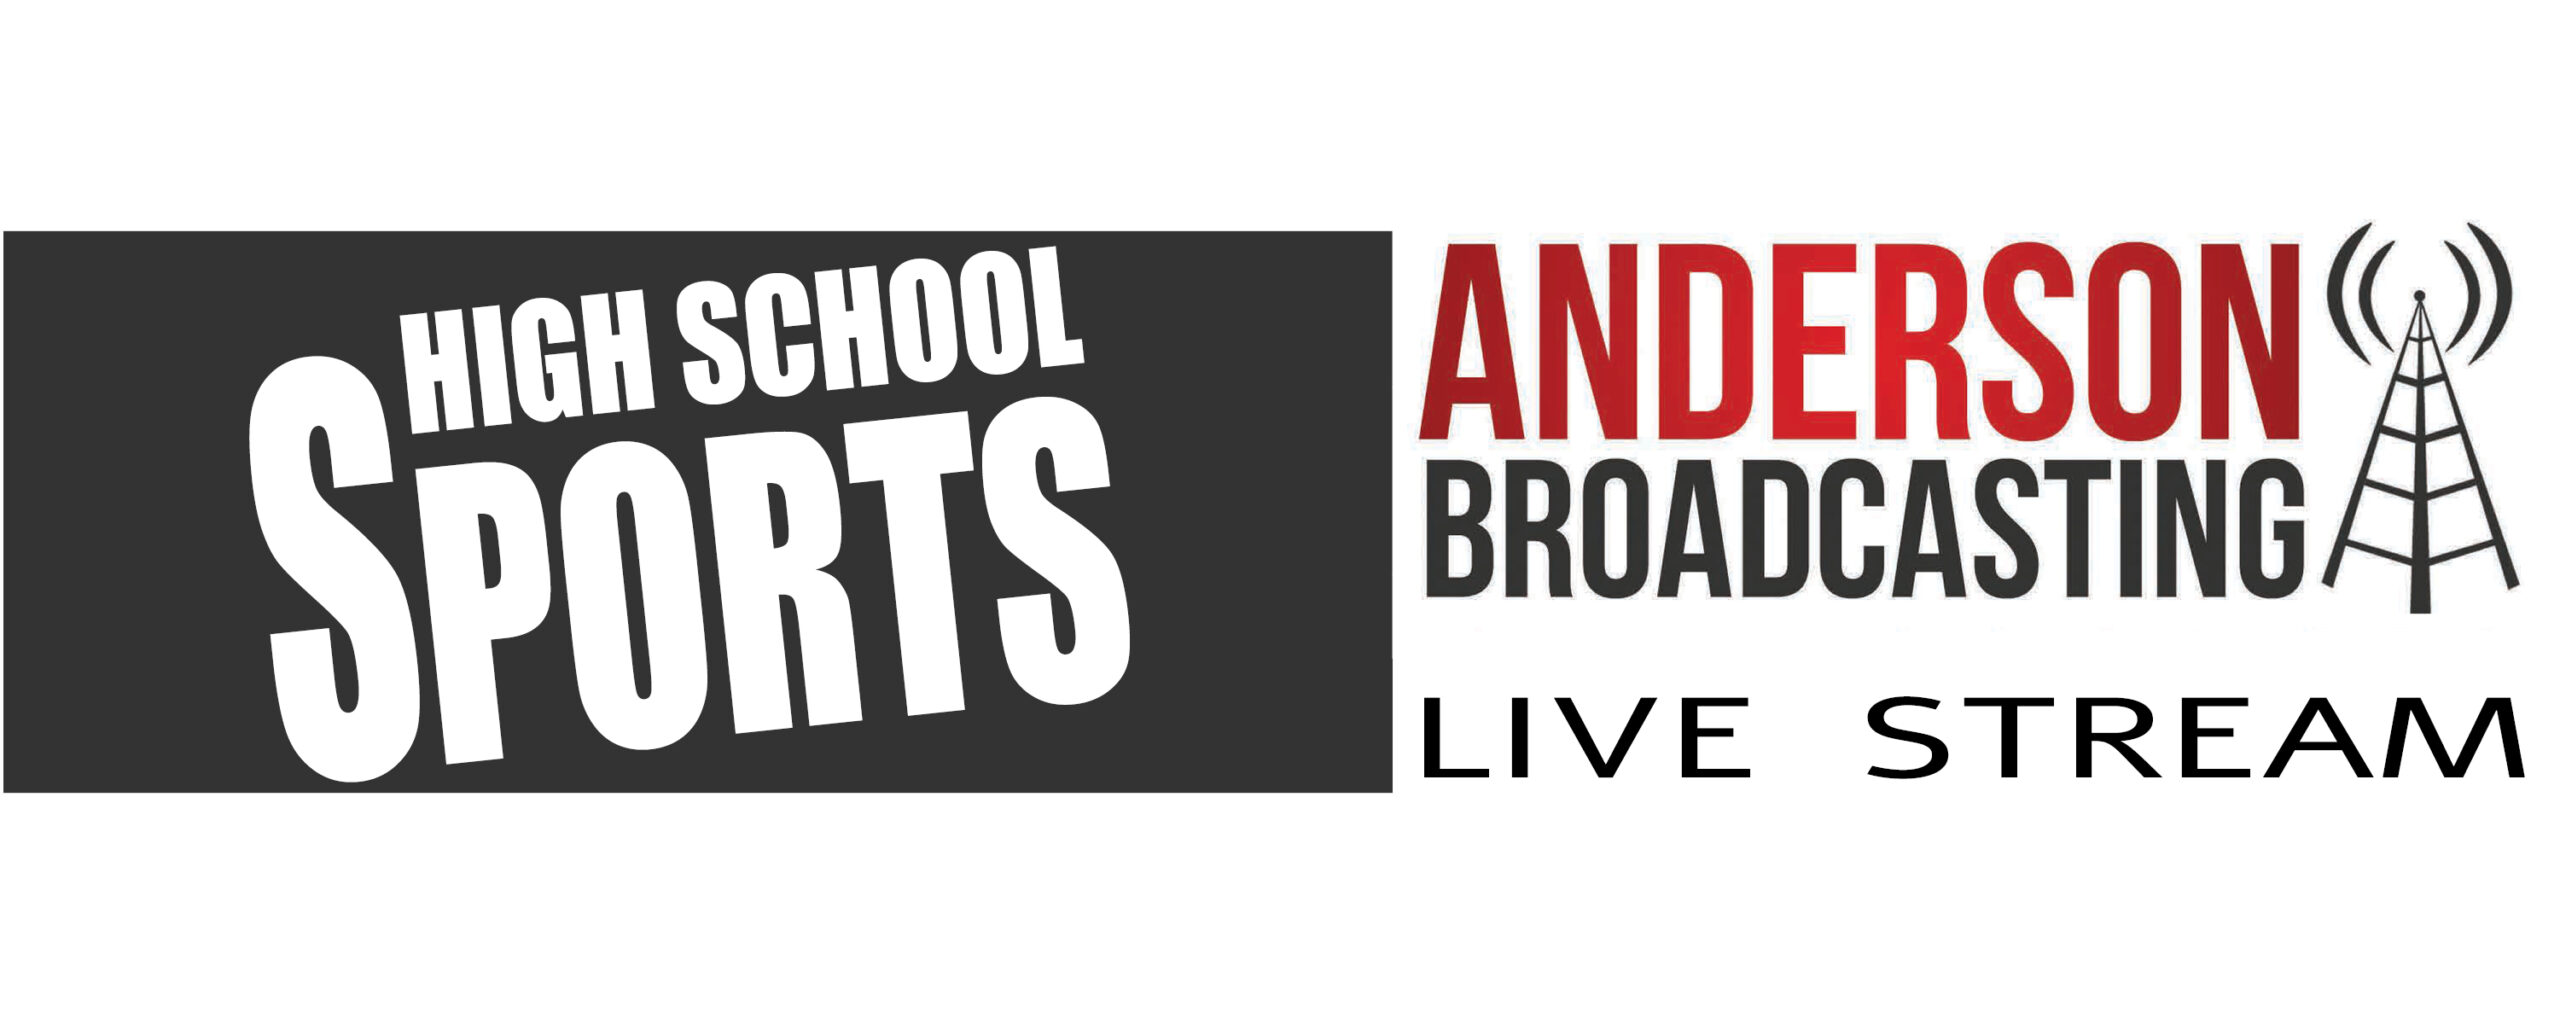 Anderson Broadcasting Live High School Sports Stream